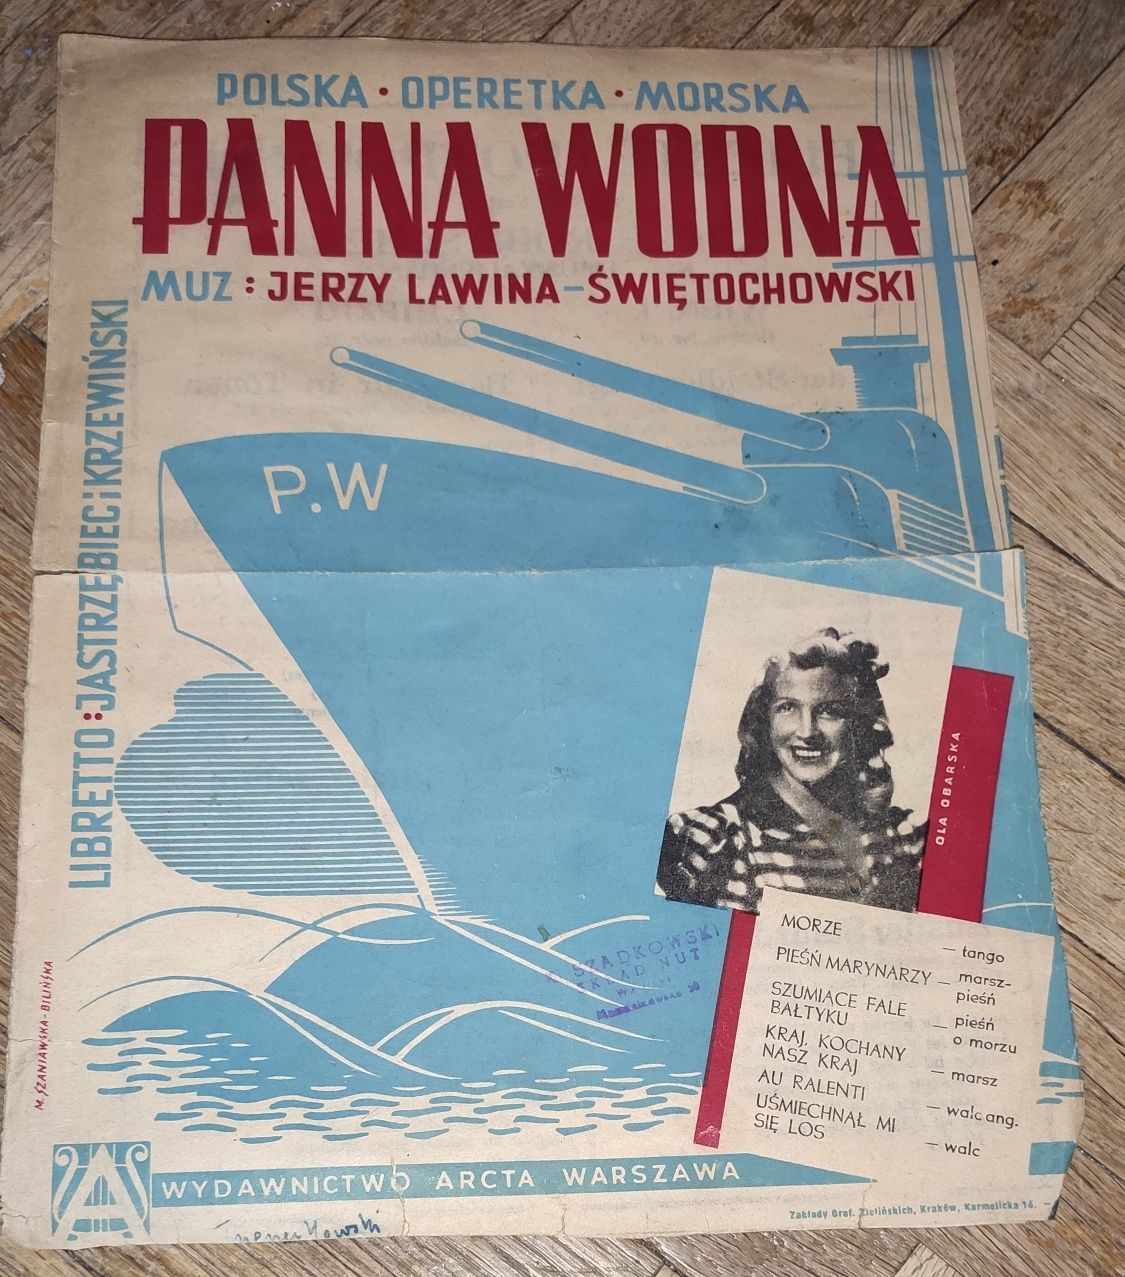 Panna Wodna nuty polska operetka morska Jerzy Lawina 1946